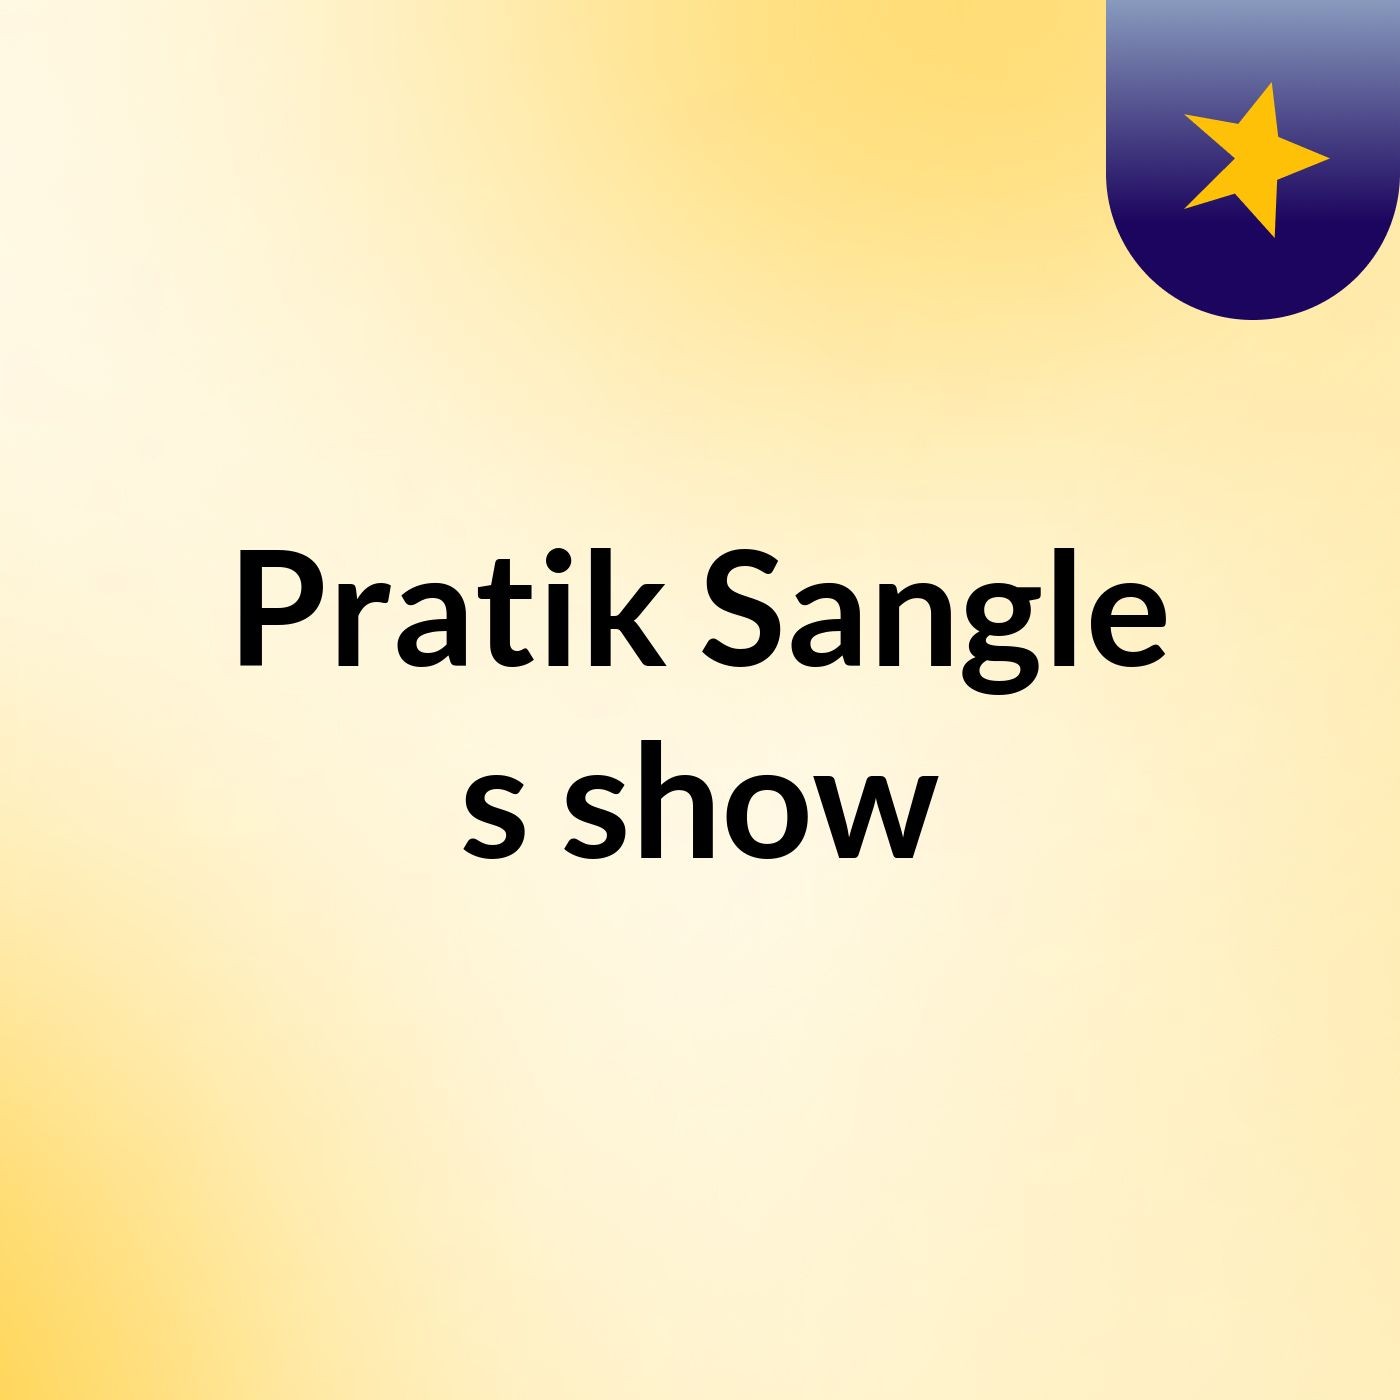 Pratik Sangle's show